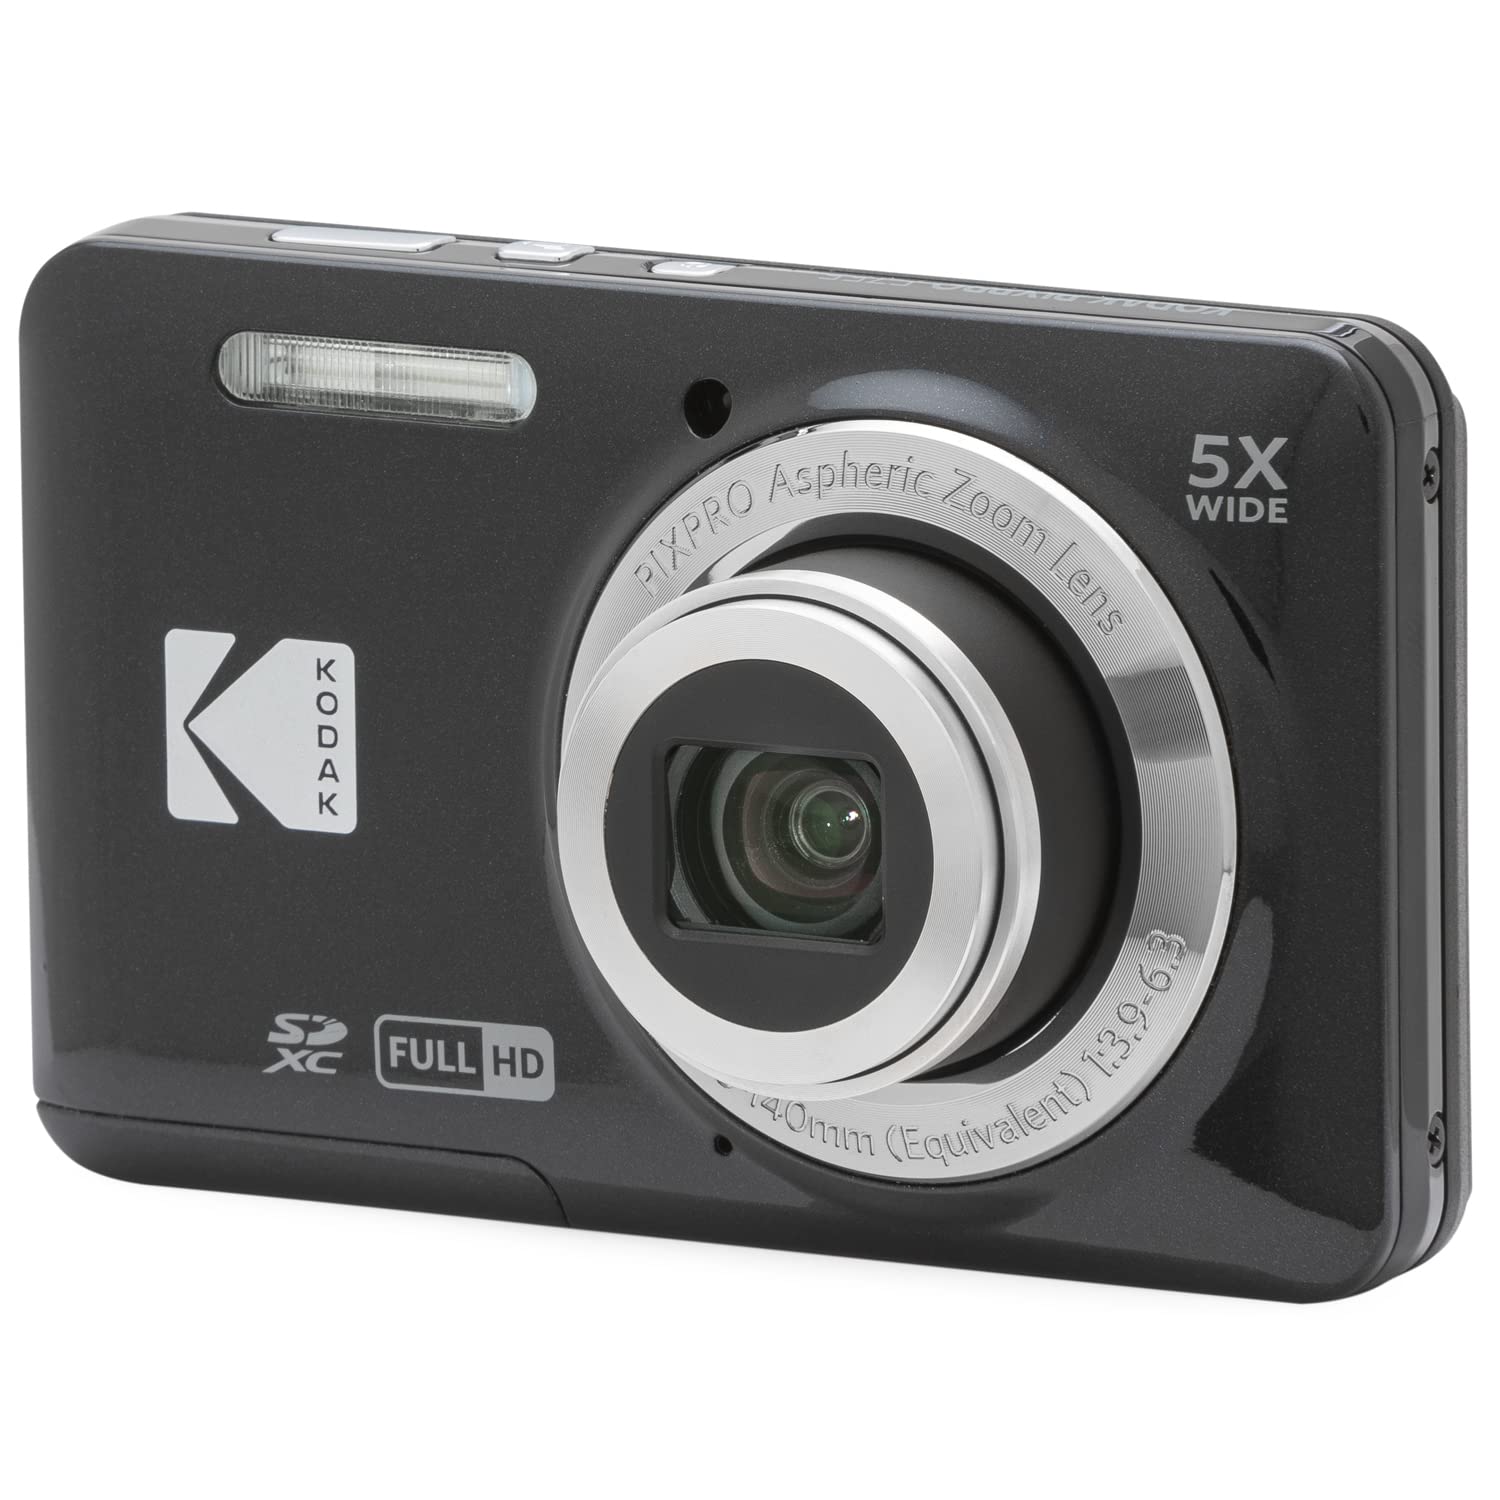 Kodak PIXPRO FZ55 Digital Camera, Black Bundle with Lexar 32GB High-Performance 800x UHS-I SDHC Memory Card + Deco Photo Point and Shoot Field Bag Camera Case